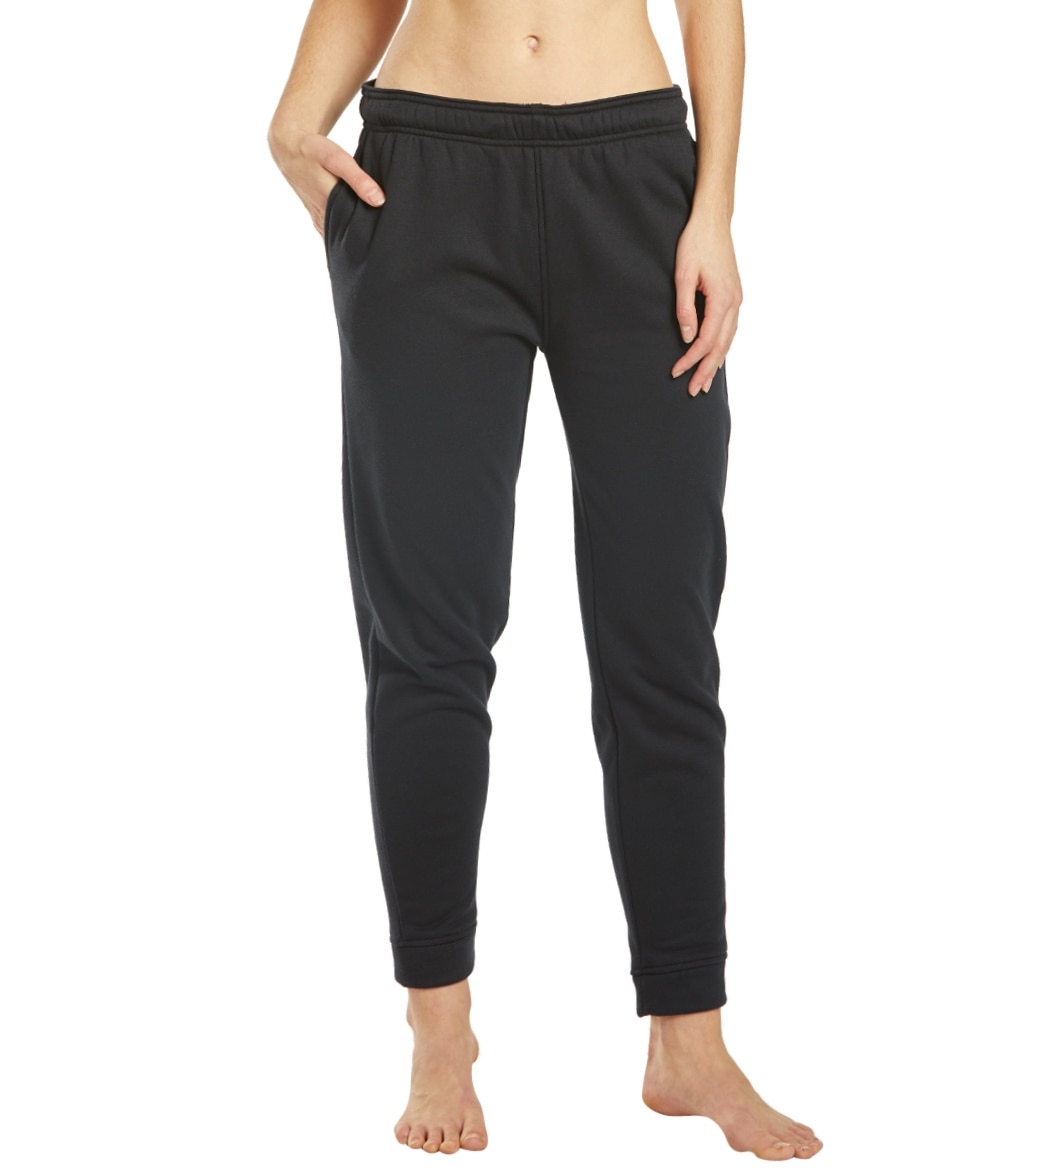 Speedo Women's Team Pants - Black Xs Size X-Small Cotton/Polyester - Swimoutlet.com